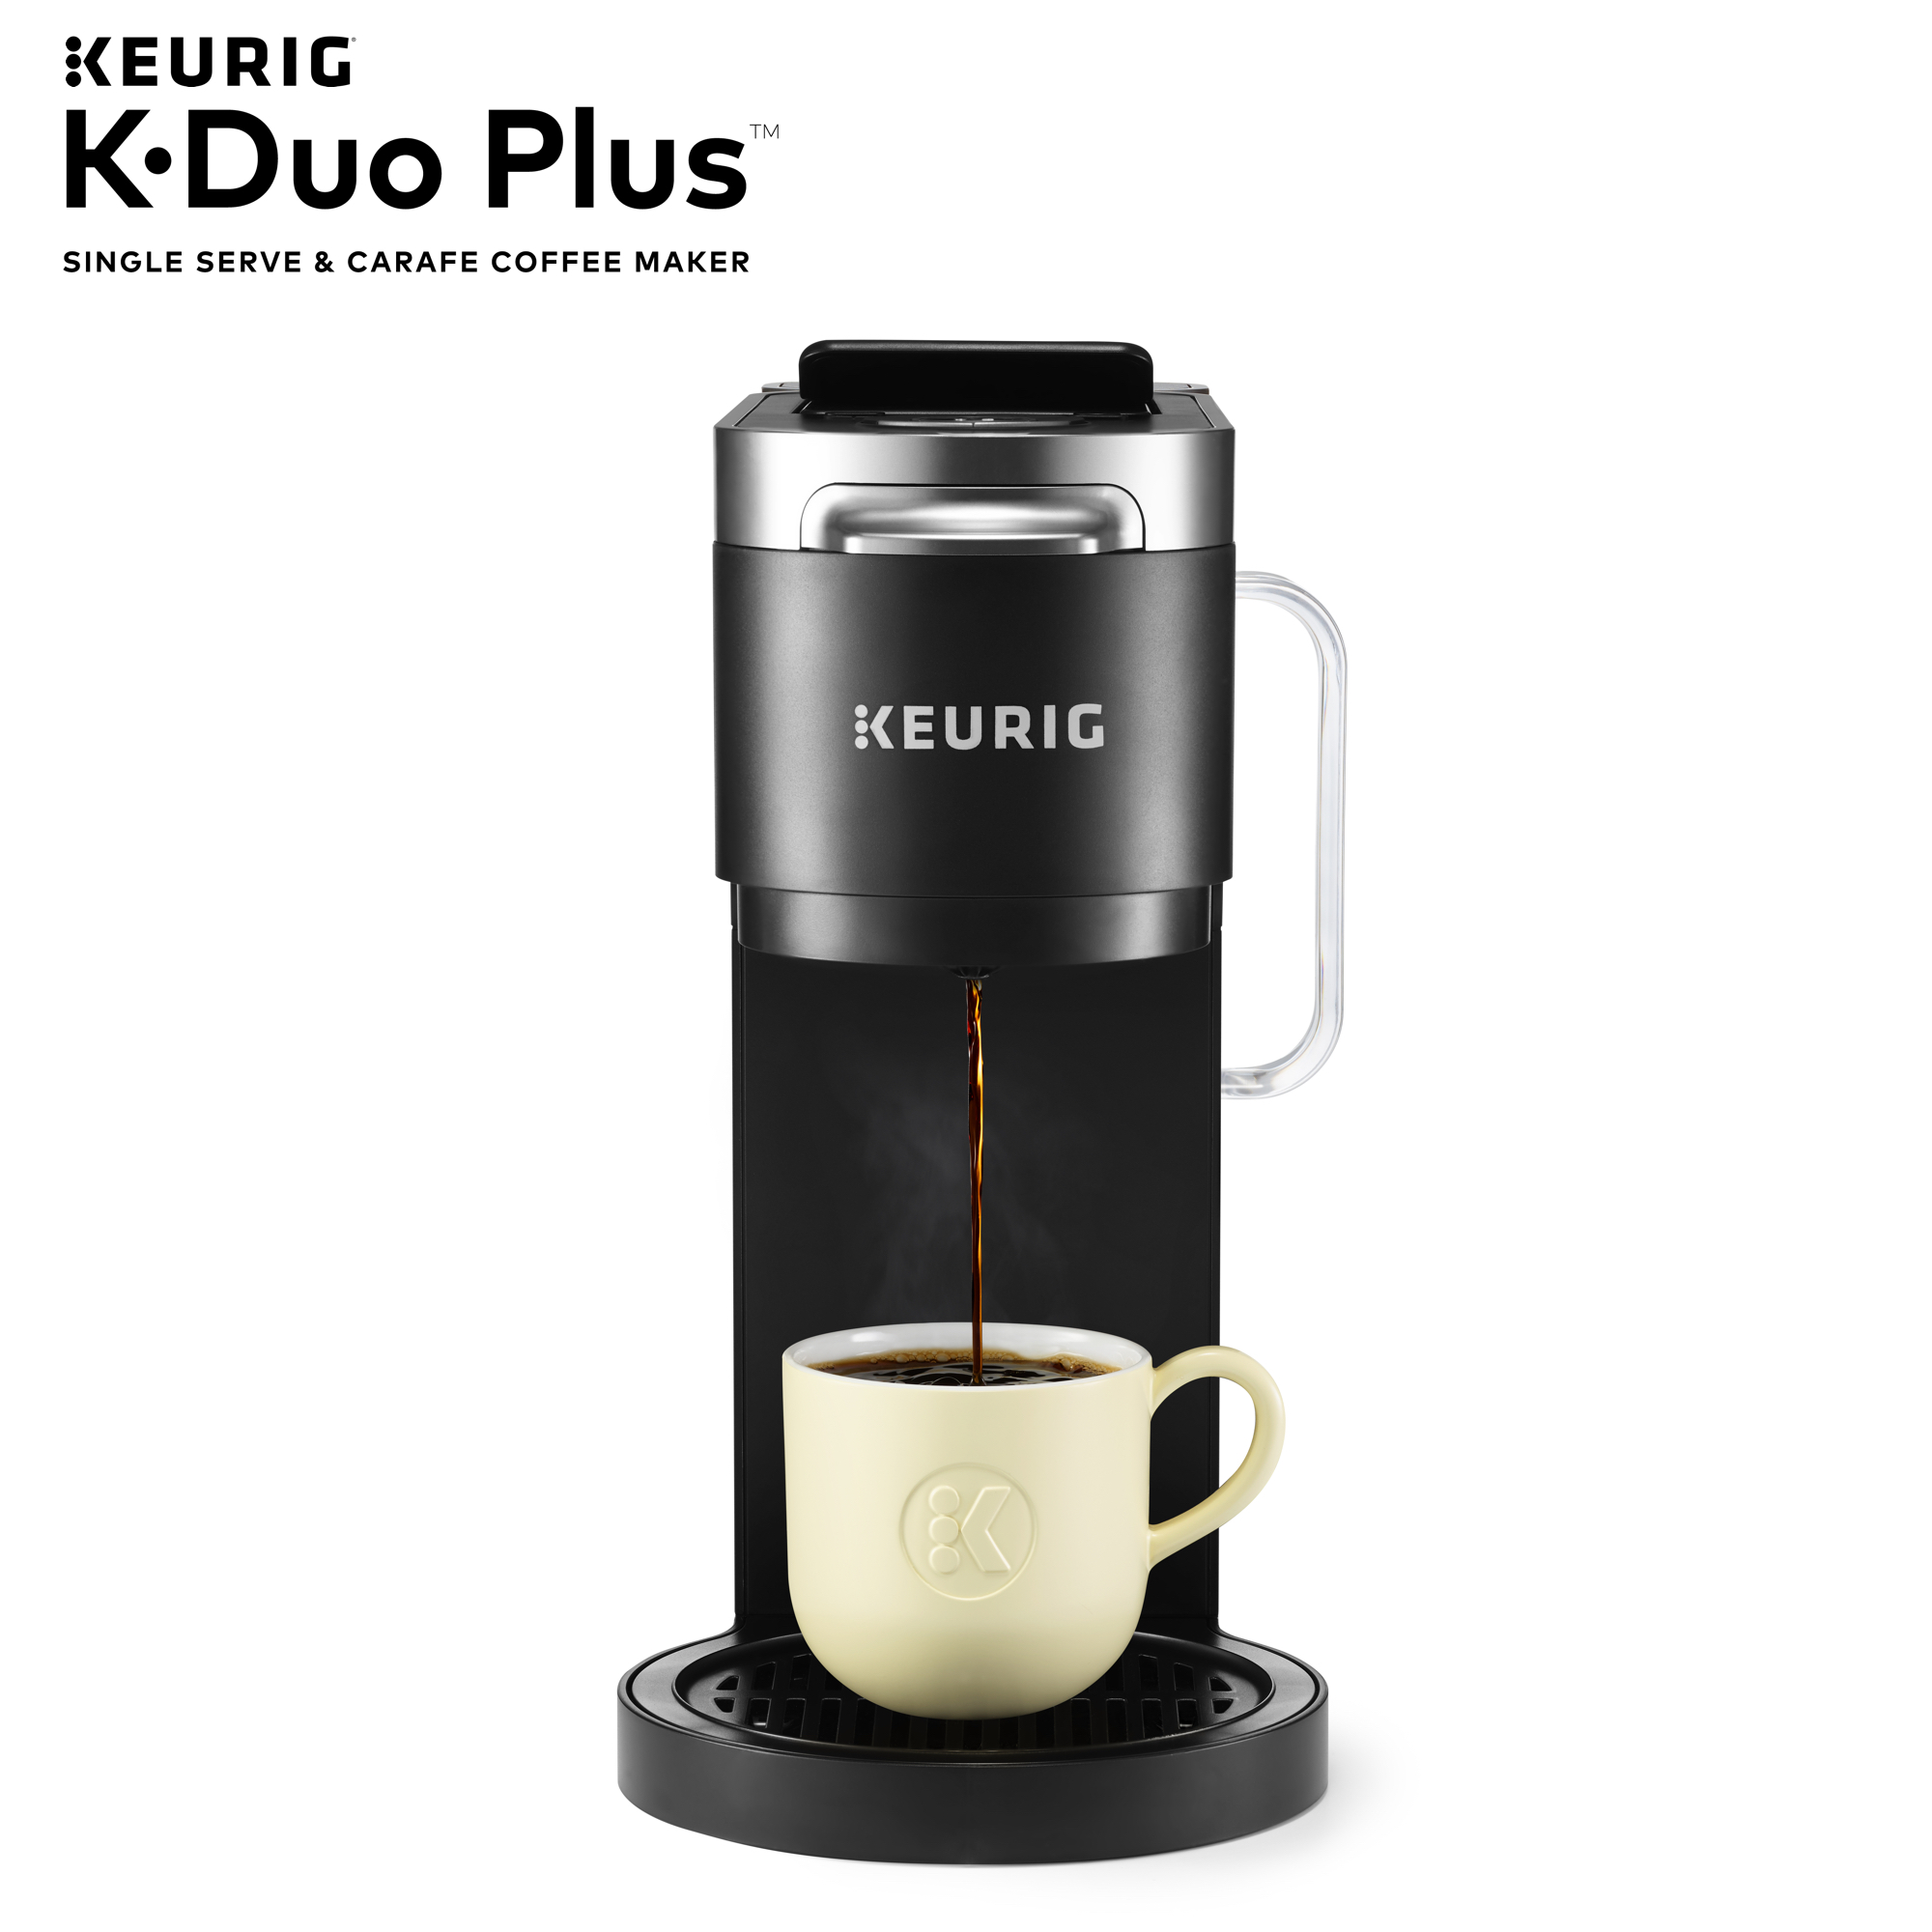 Keurig K-Duo Plus Single Serve & Carafe Coffee Maker - image 8 of 24